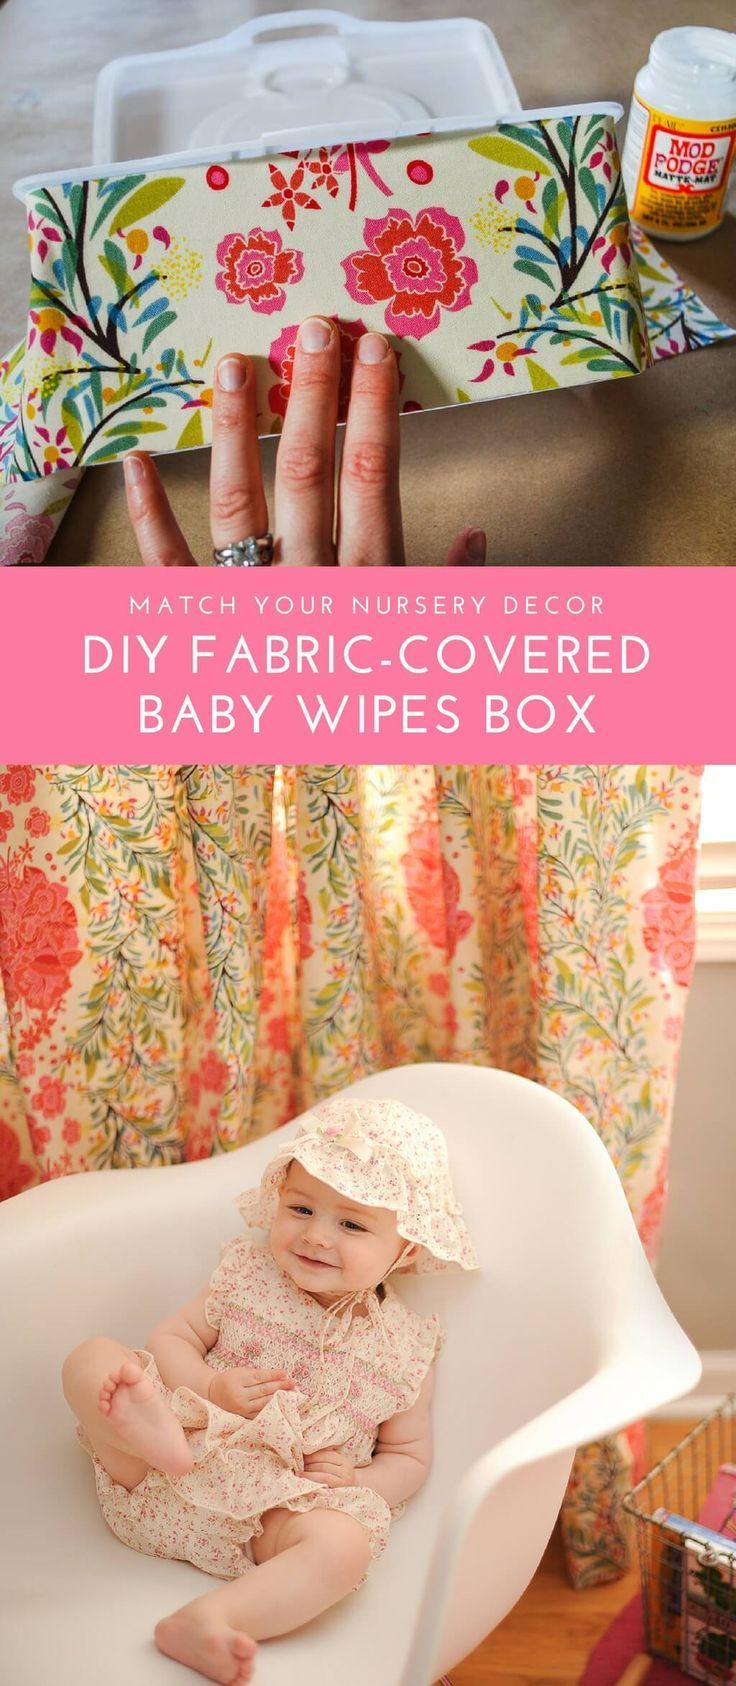 DIY Baby Wipes Container Craft to Match Nursery Decor - Merriment Design -   17 fabric crafts Nursery decor ideas